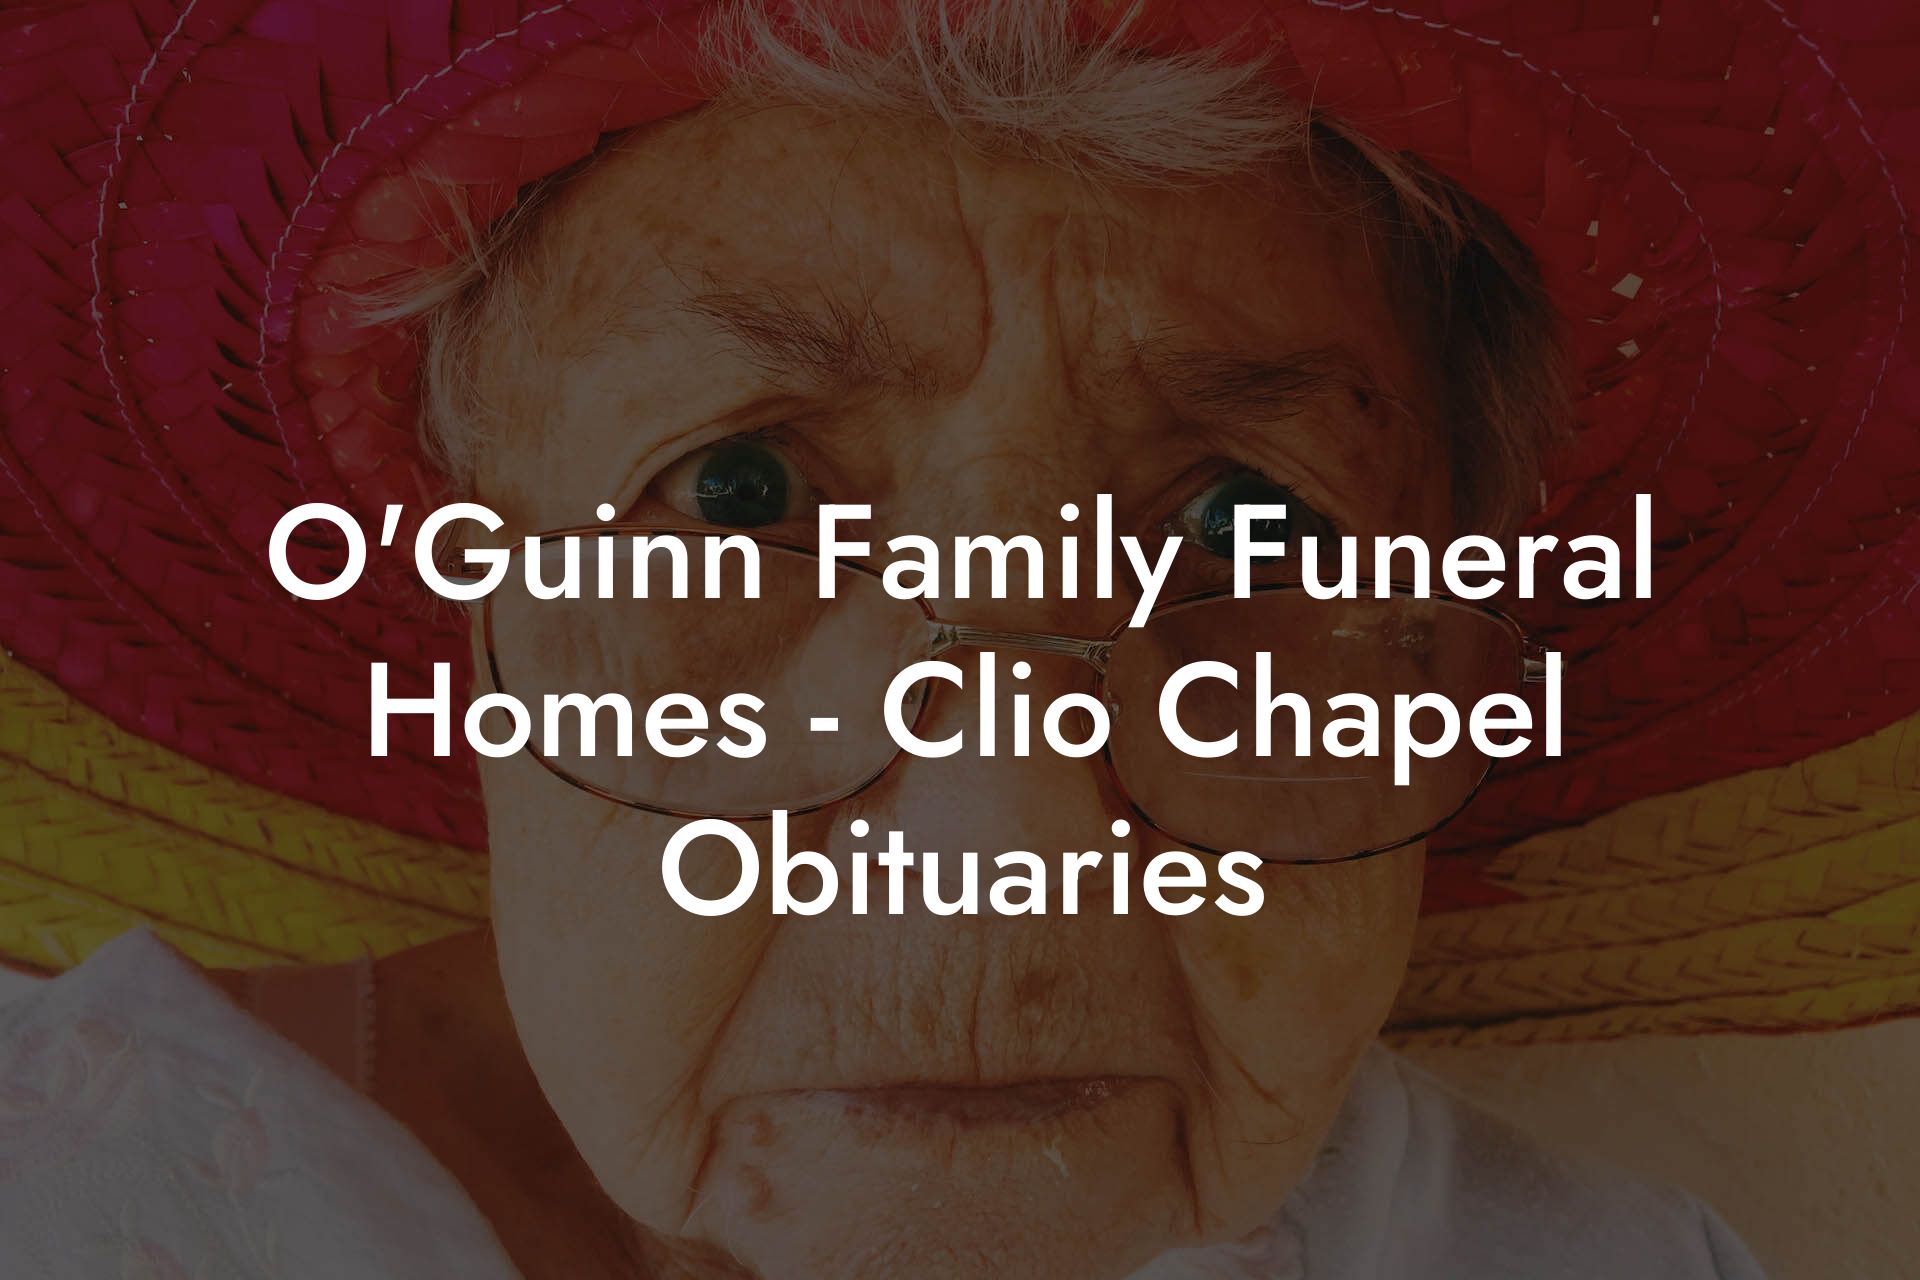 O'Guinn Family Funeral Homes - Clio Chapel Obituaries